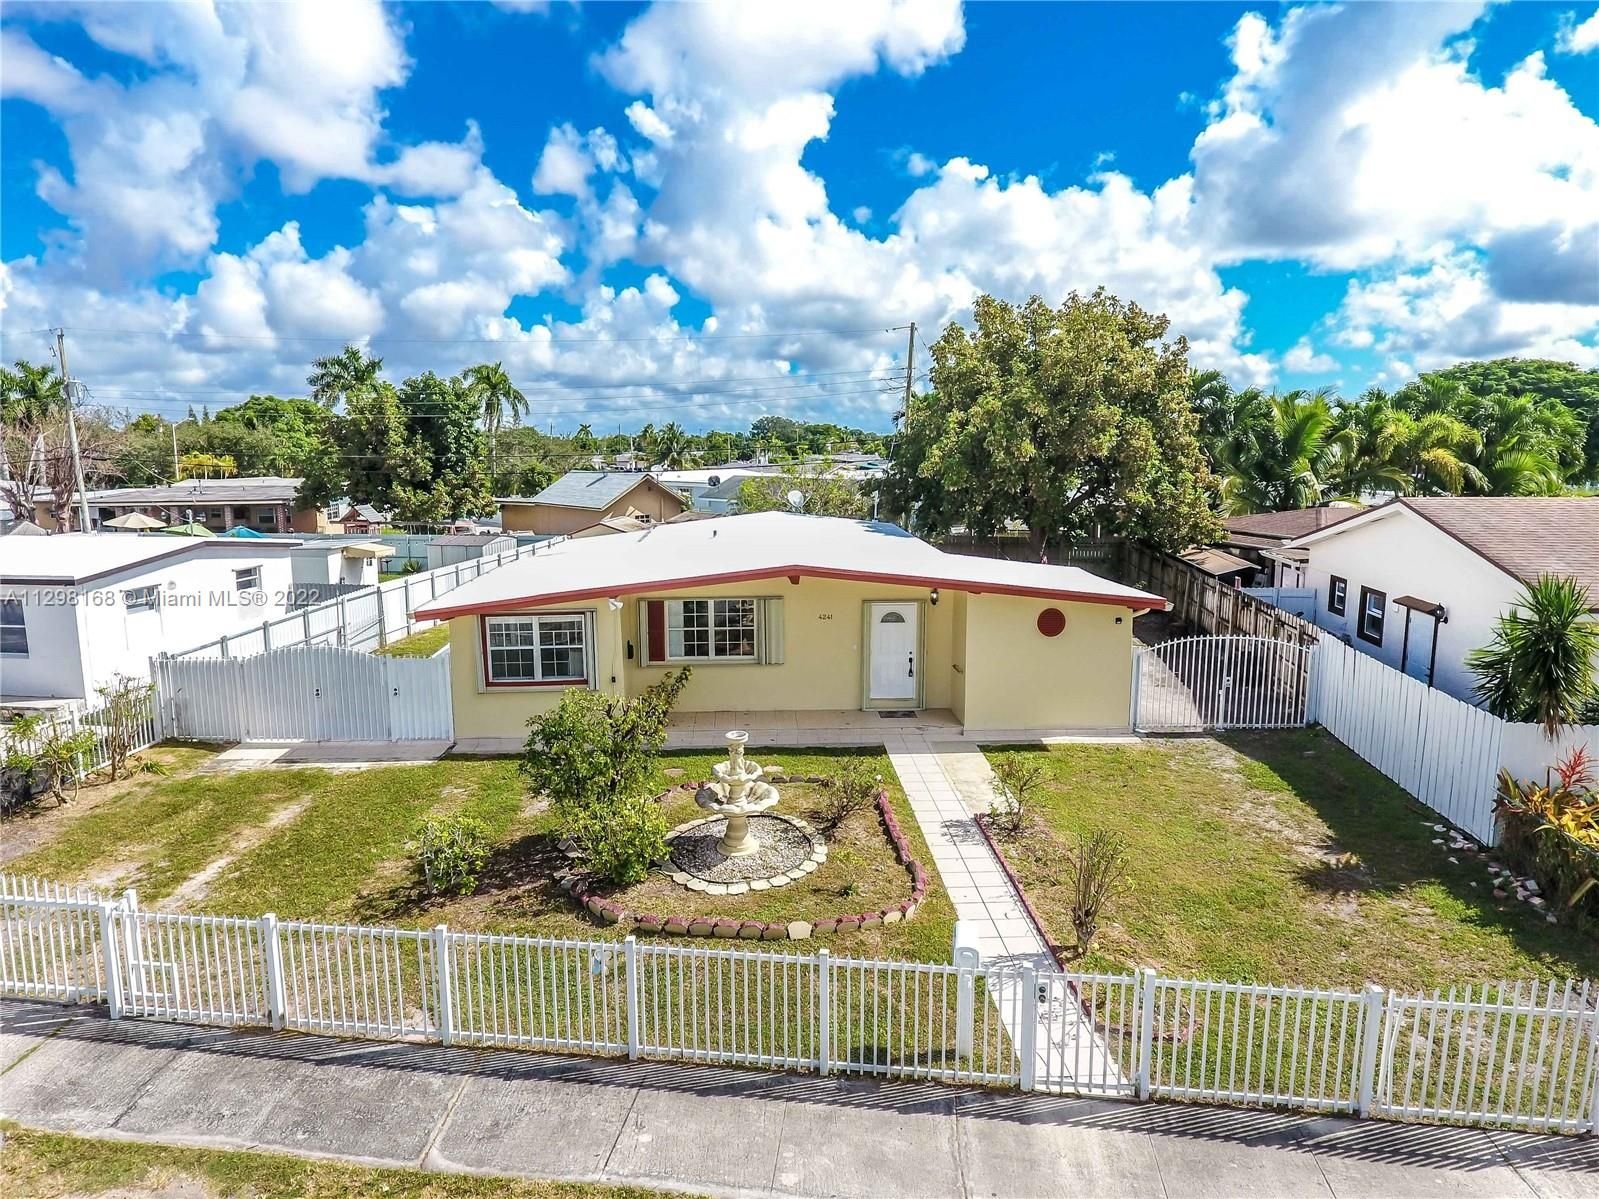 Real estate property located at 4241 116th Ave, Miami-Dade County, Miami, FL